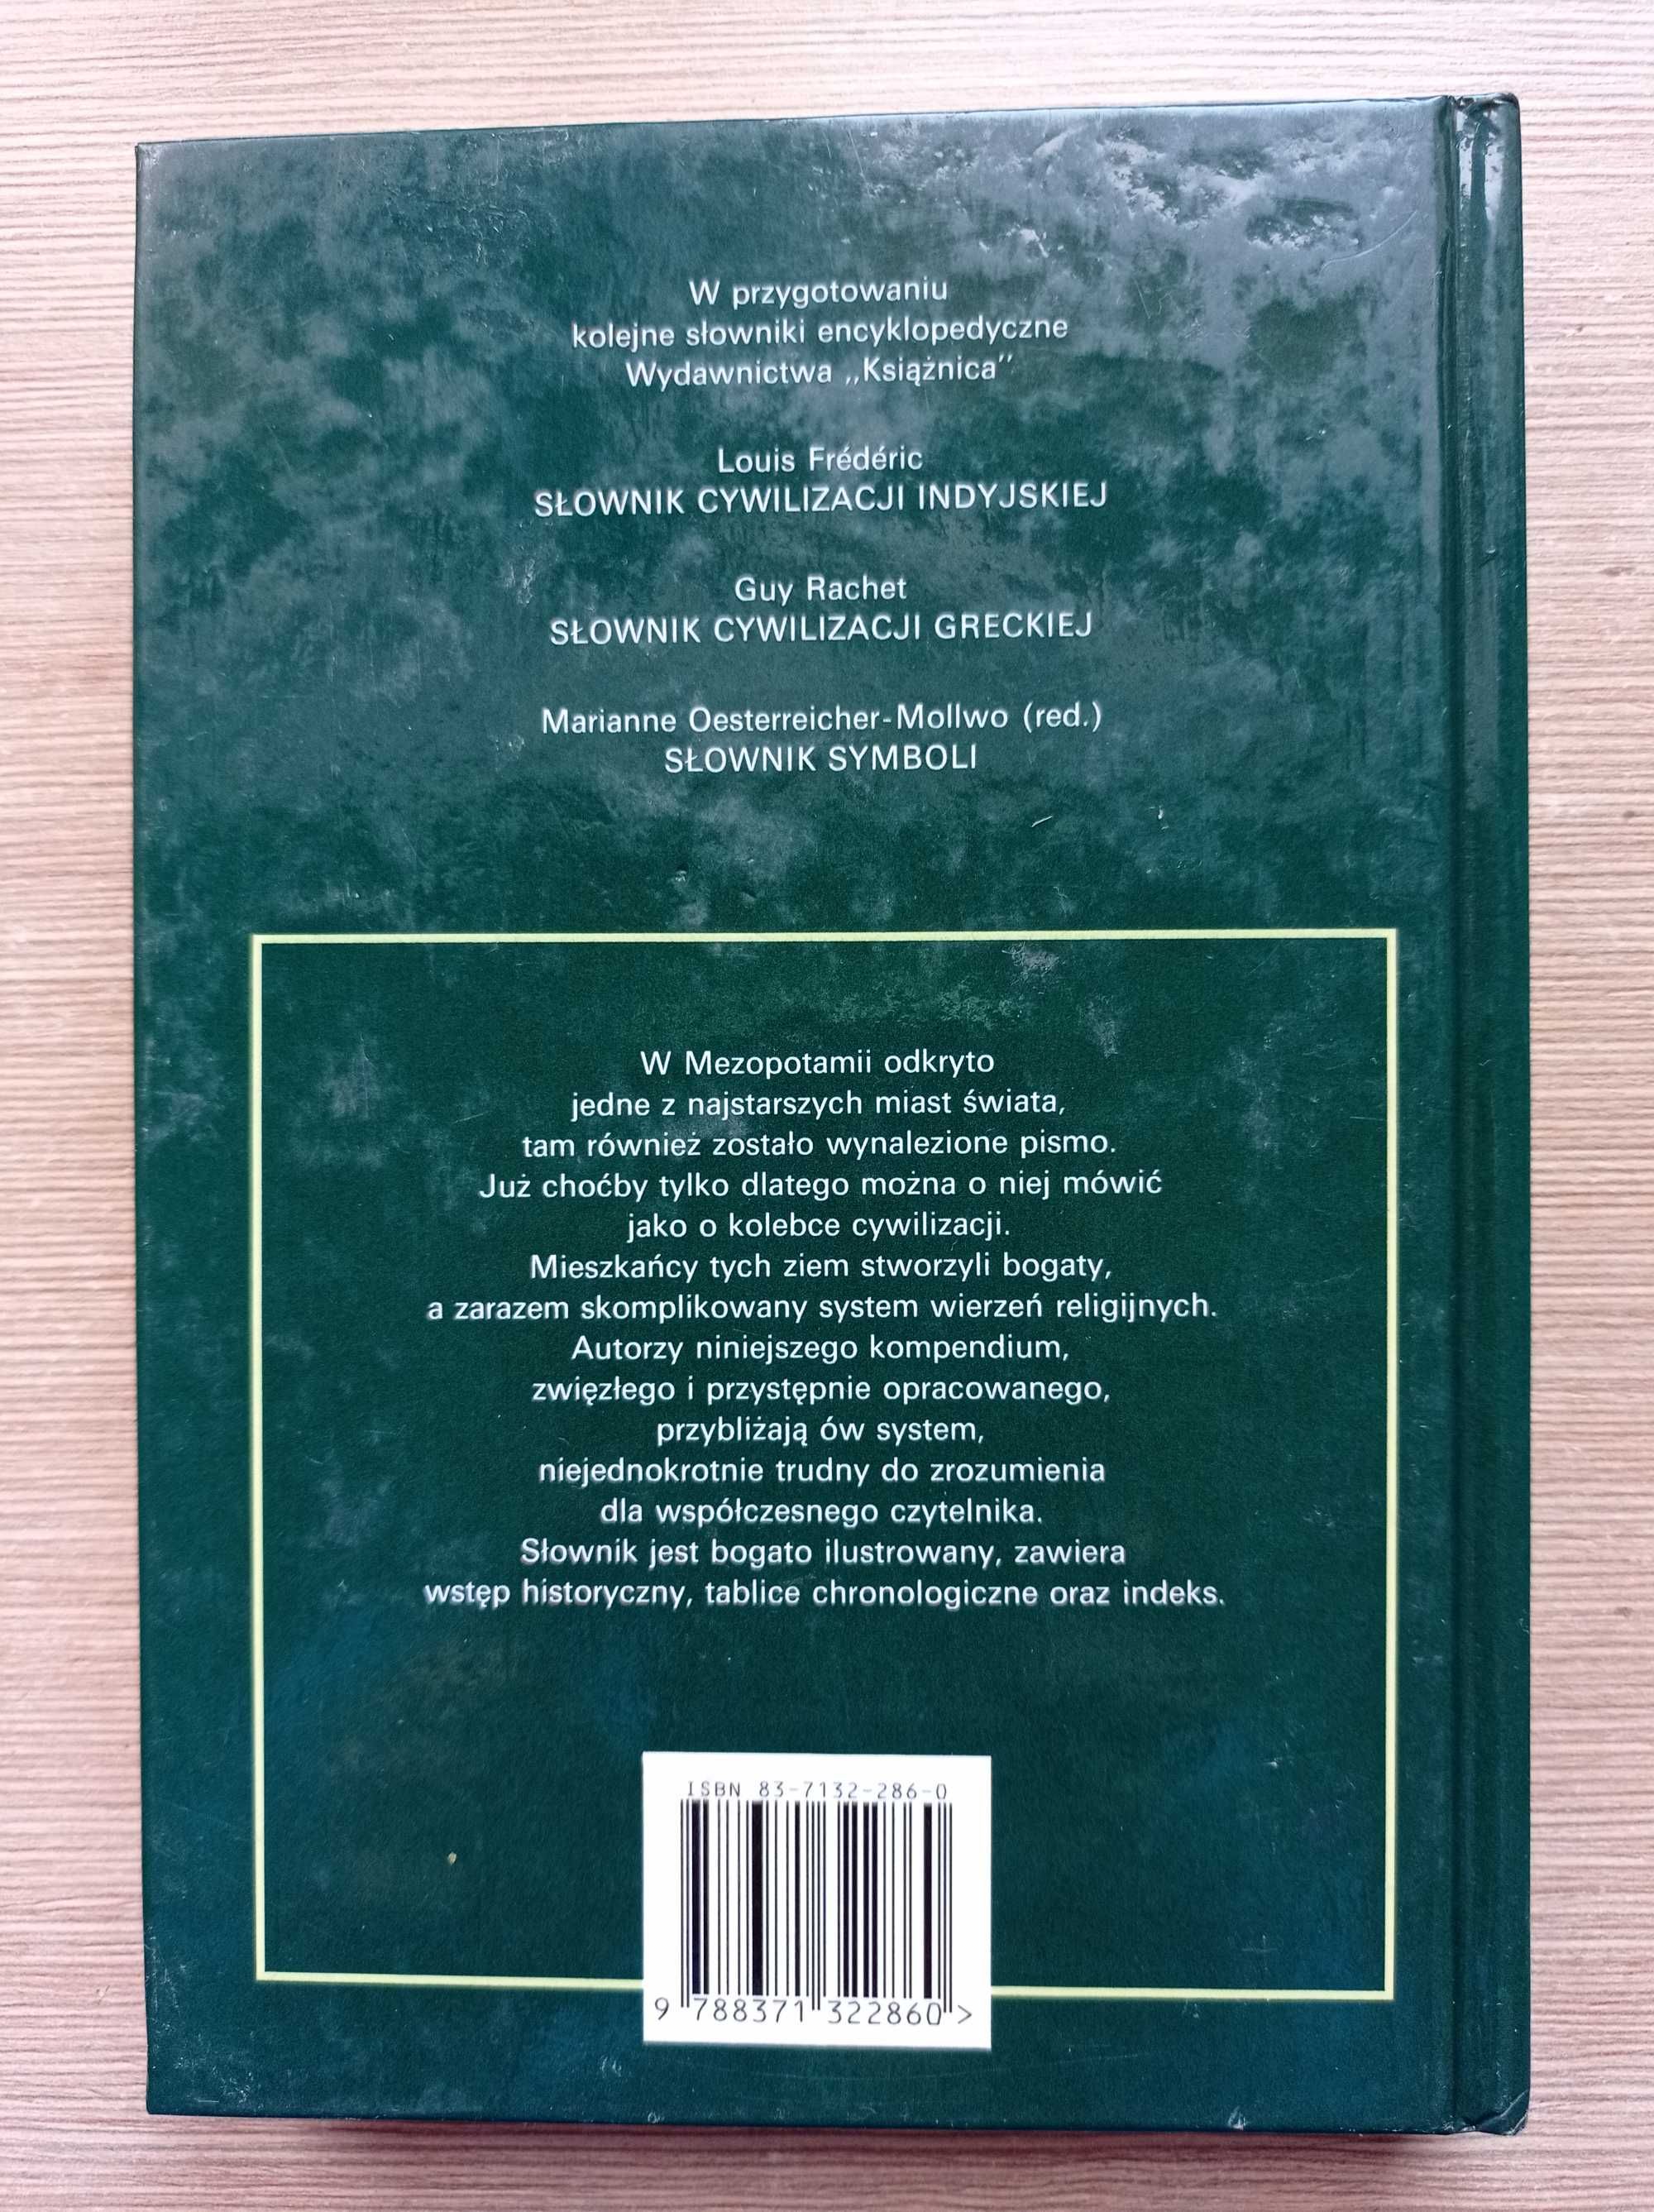 J. Black, A. Green - Słownik mitologii Mezopotamii